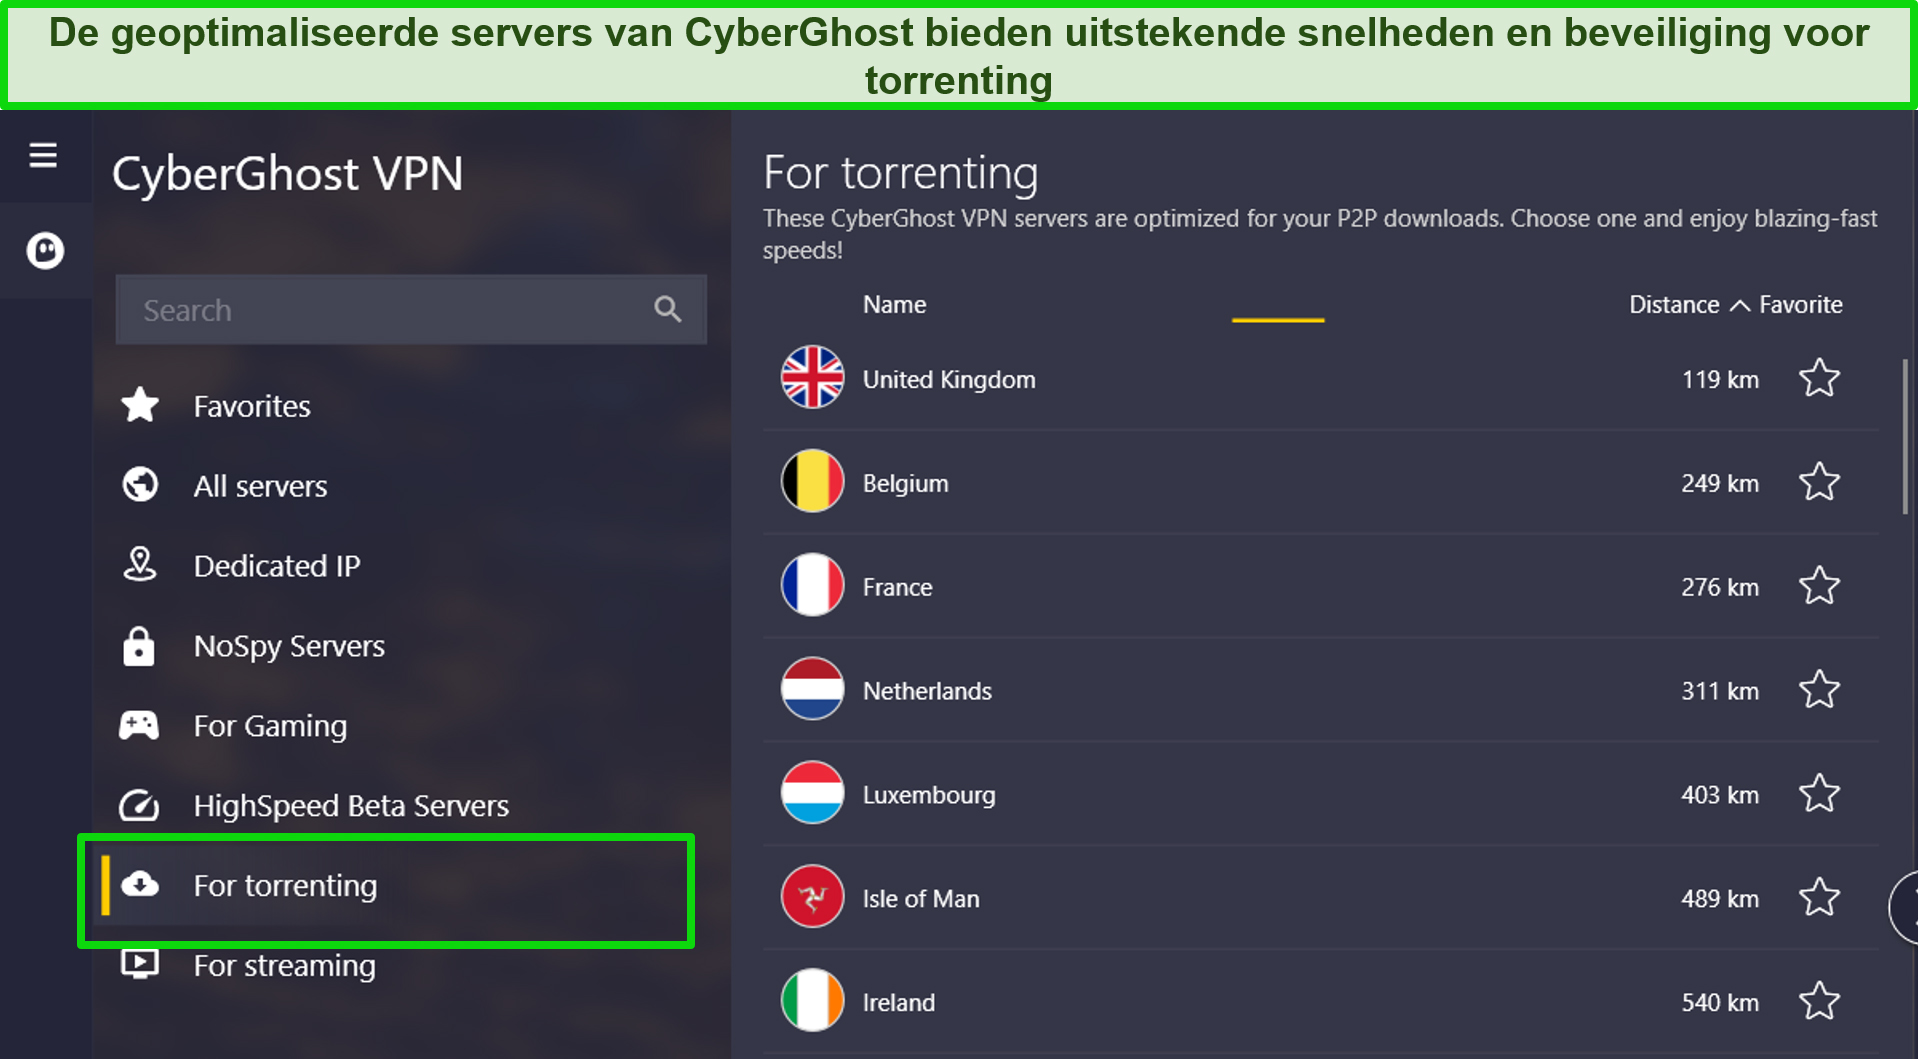 Screenshot of CyberGhost's torrenting servers on its Windows app